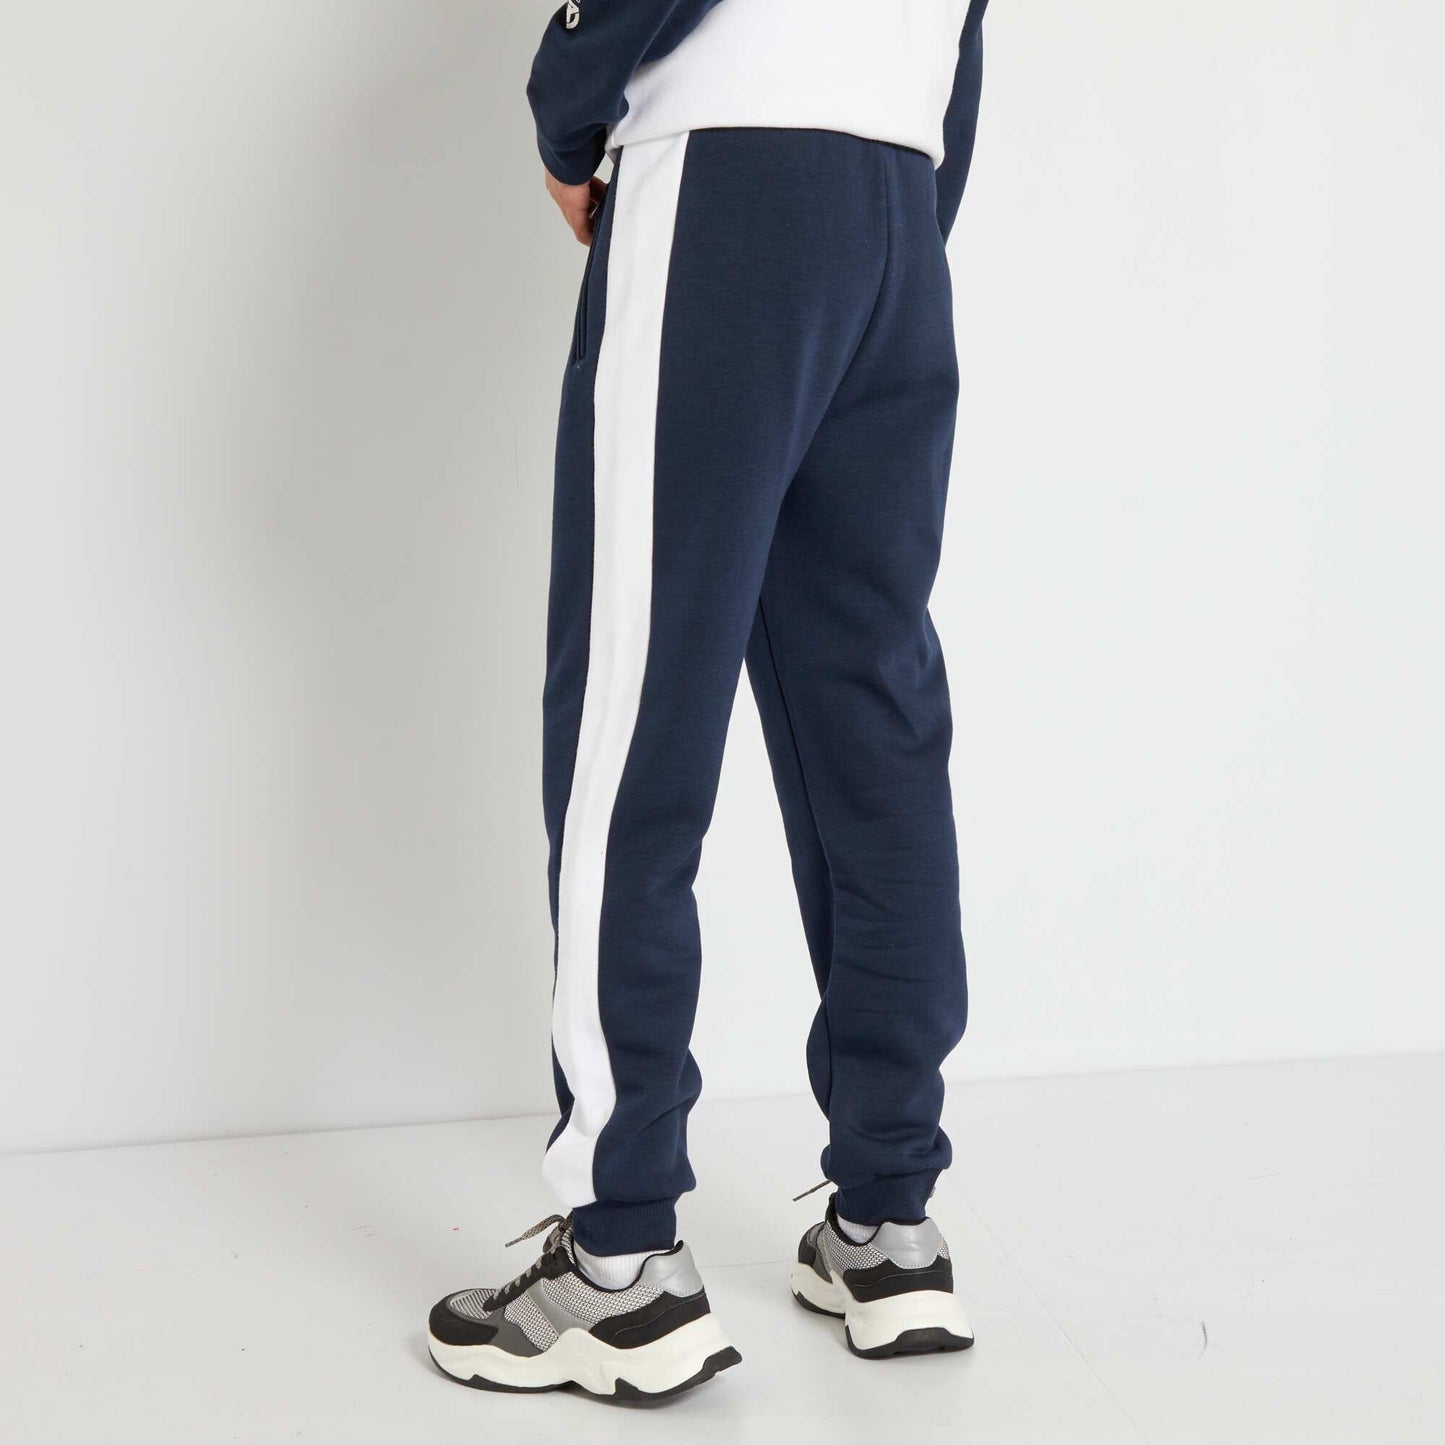 Pantalon de jogging avec bandes contrastantes bleu marine